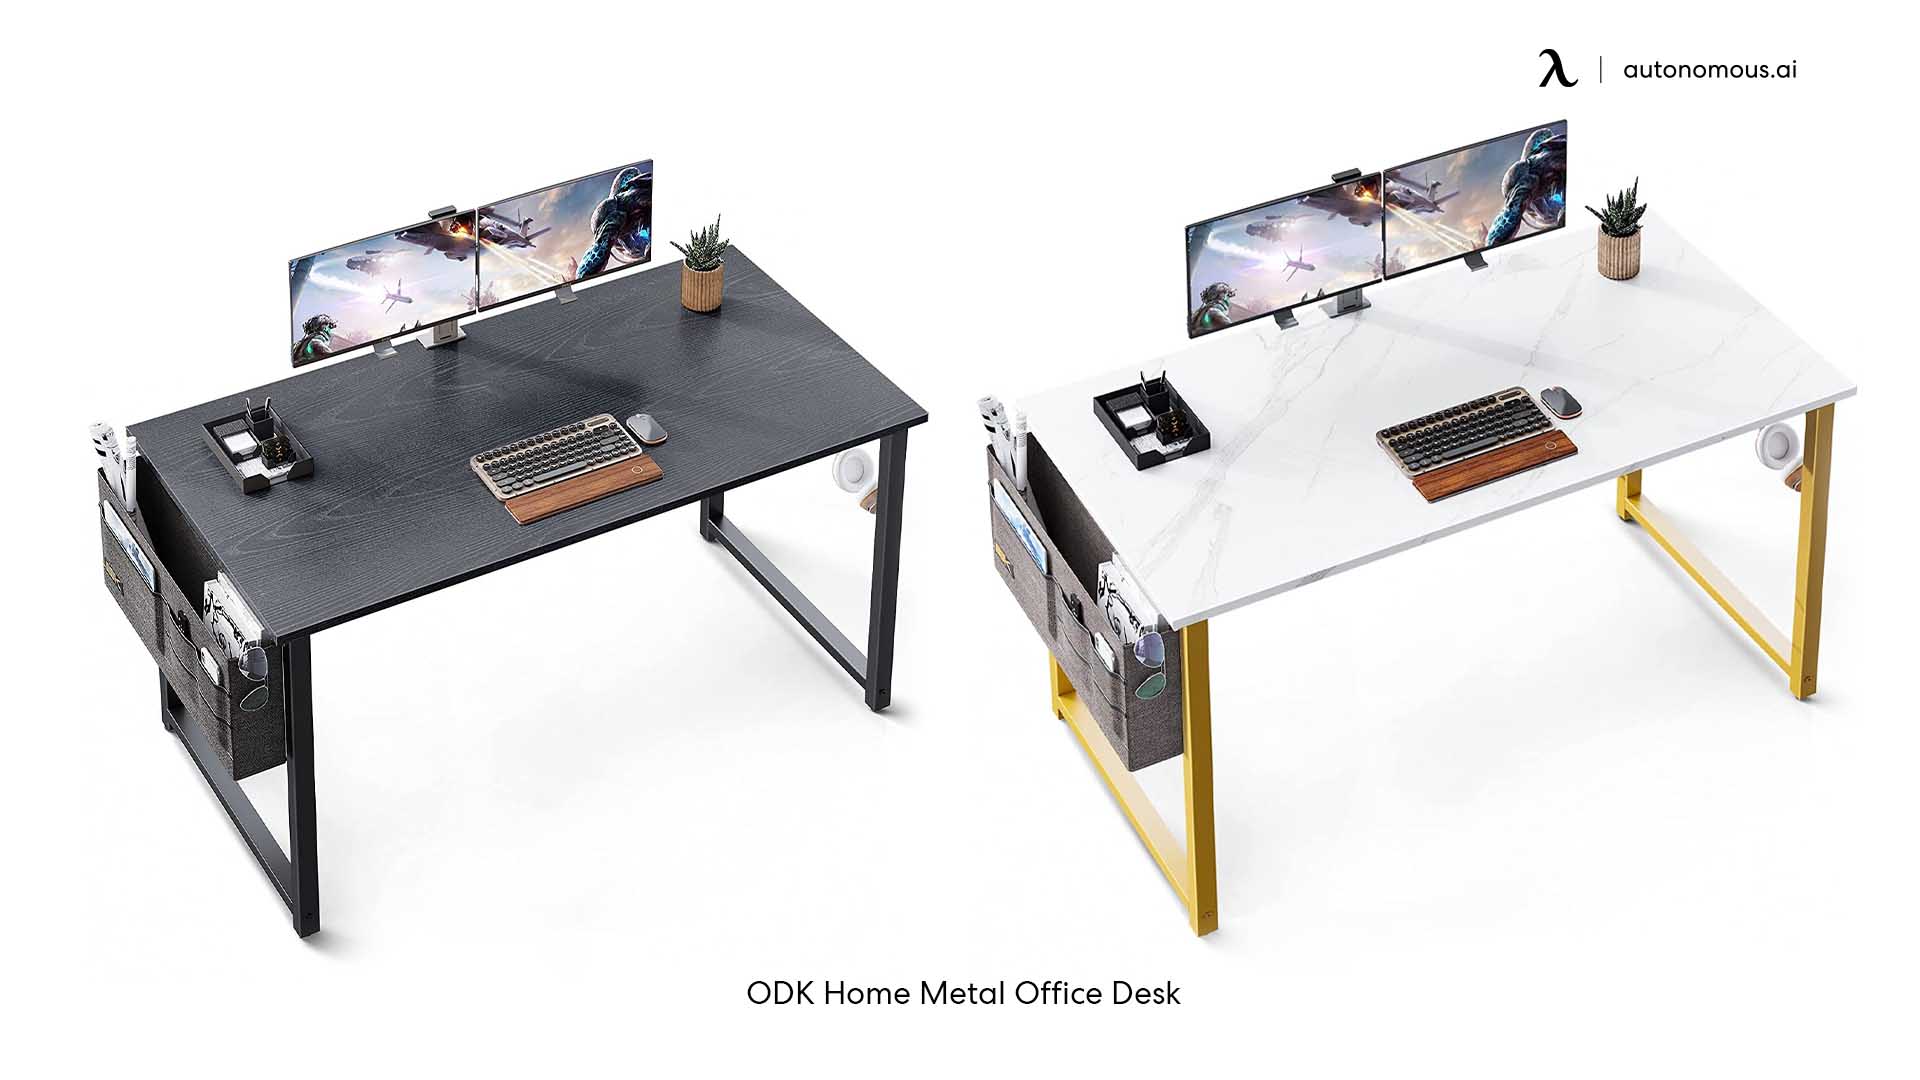 ODK Home Metal Office Desk